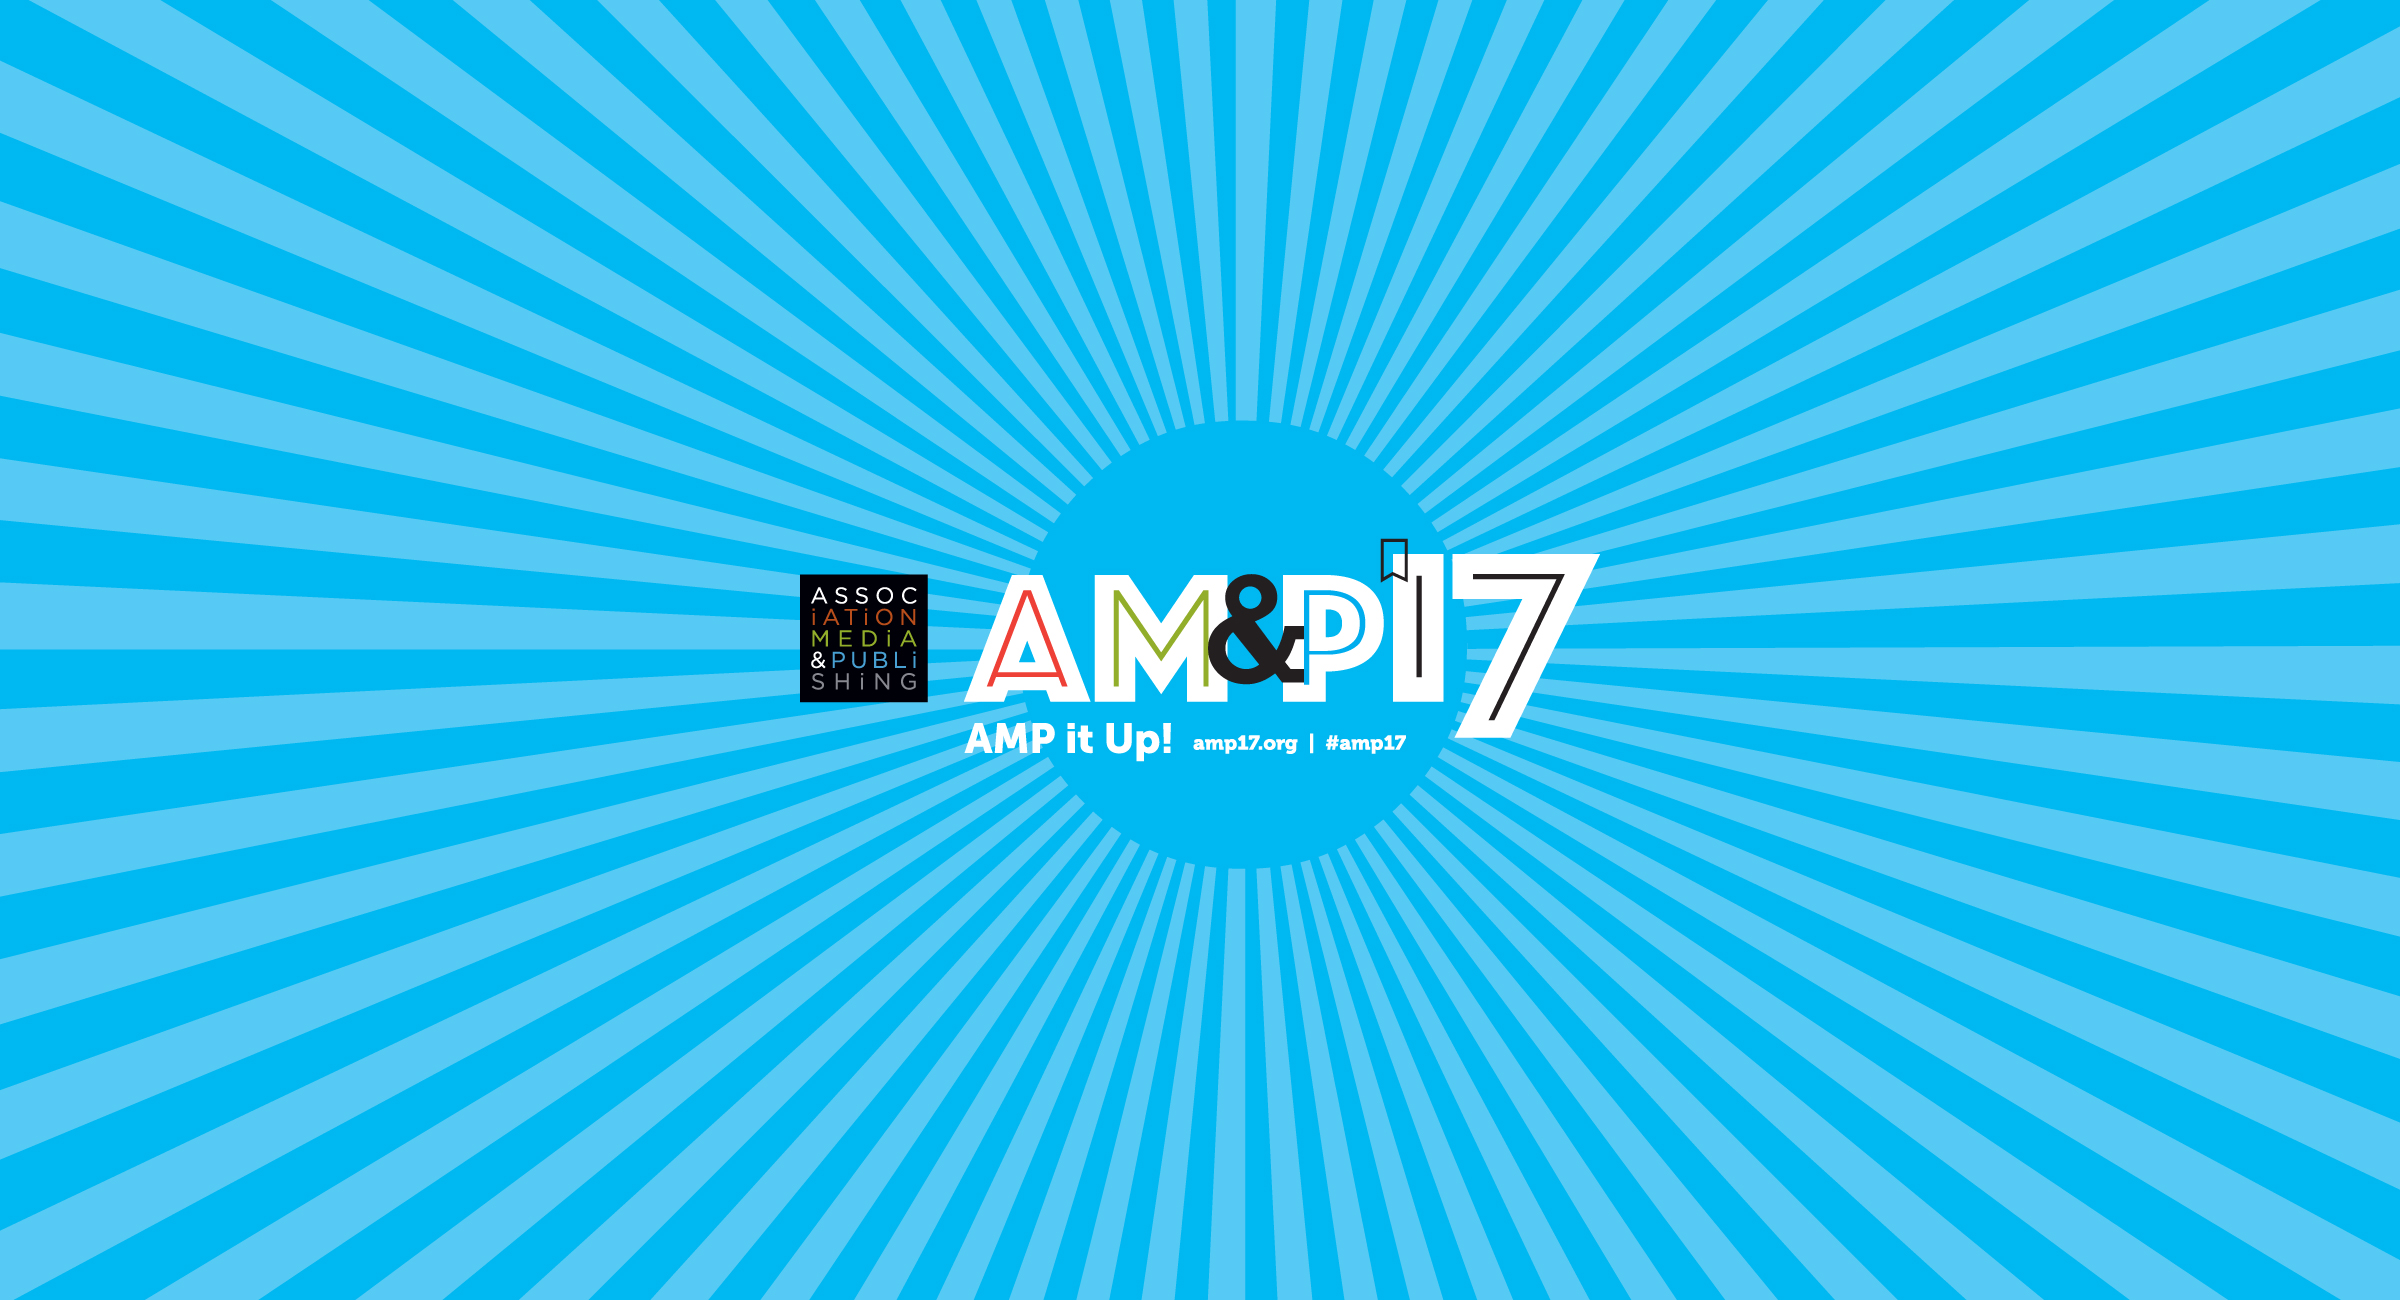 AM&P 2017 Theme: Amp it Up!